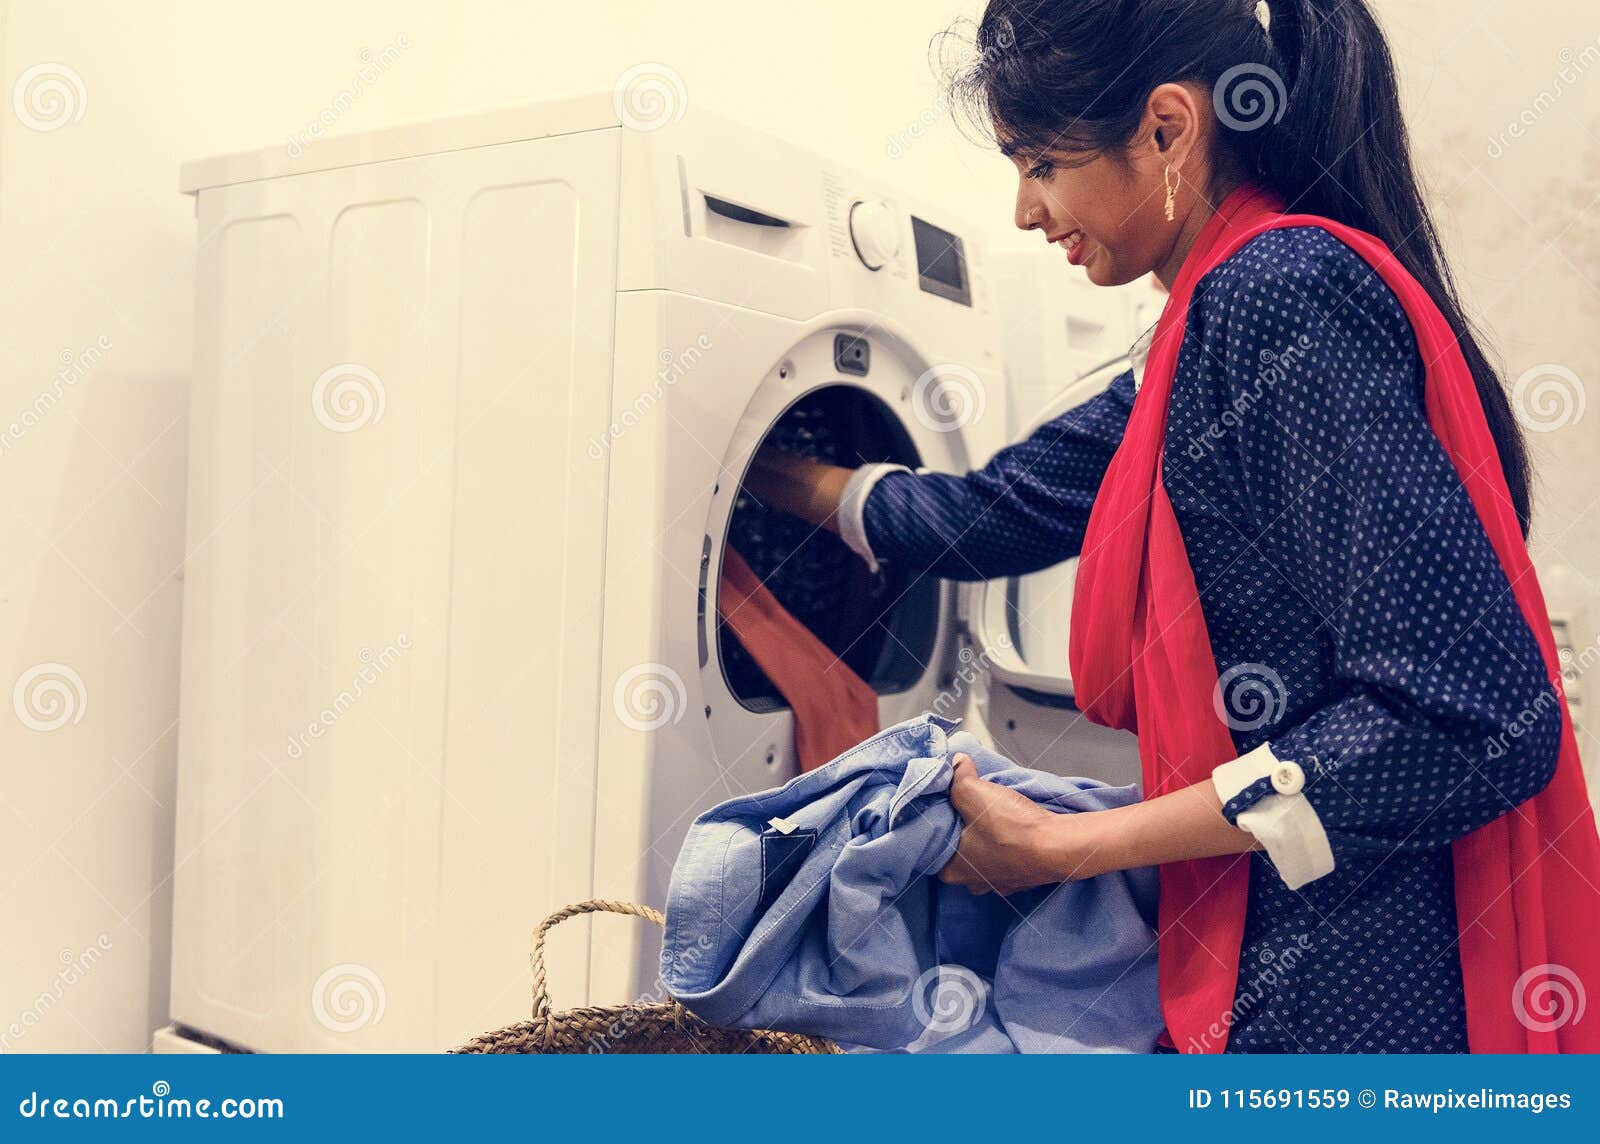 indian woman doing a laundry washing machine